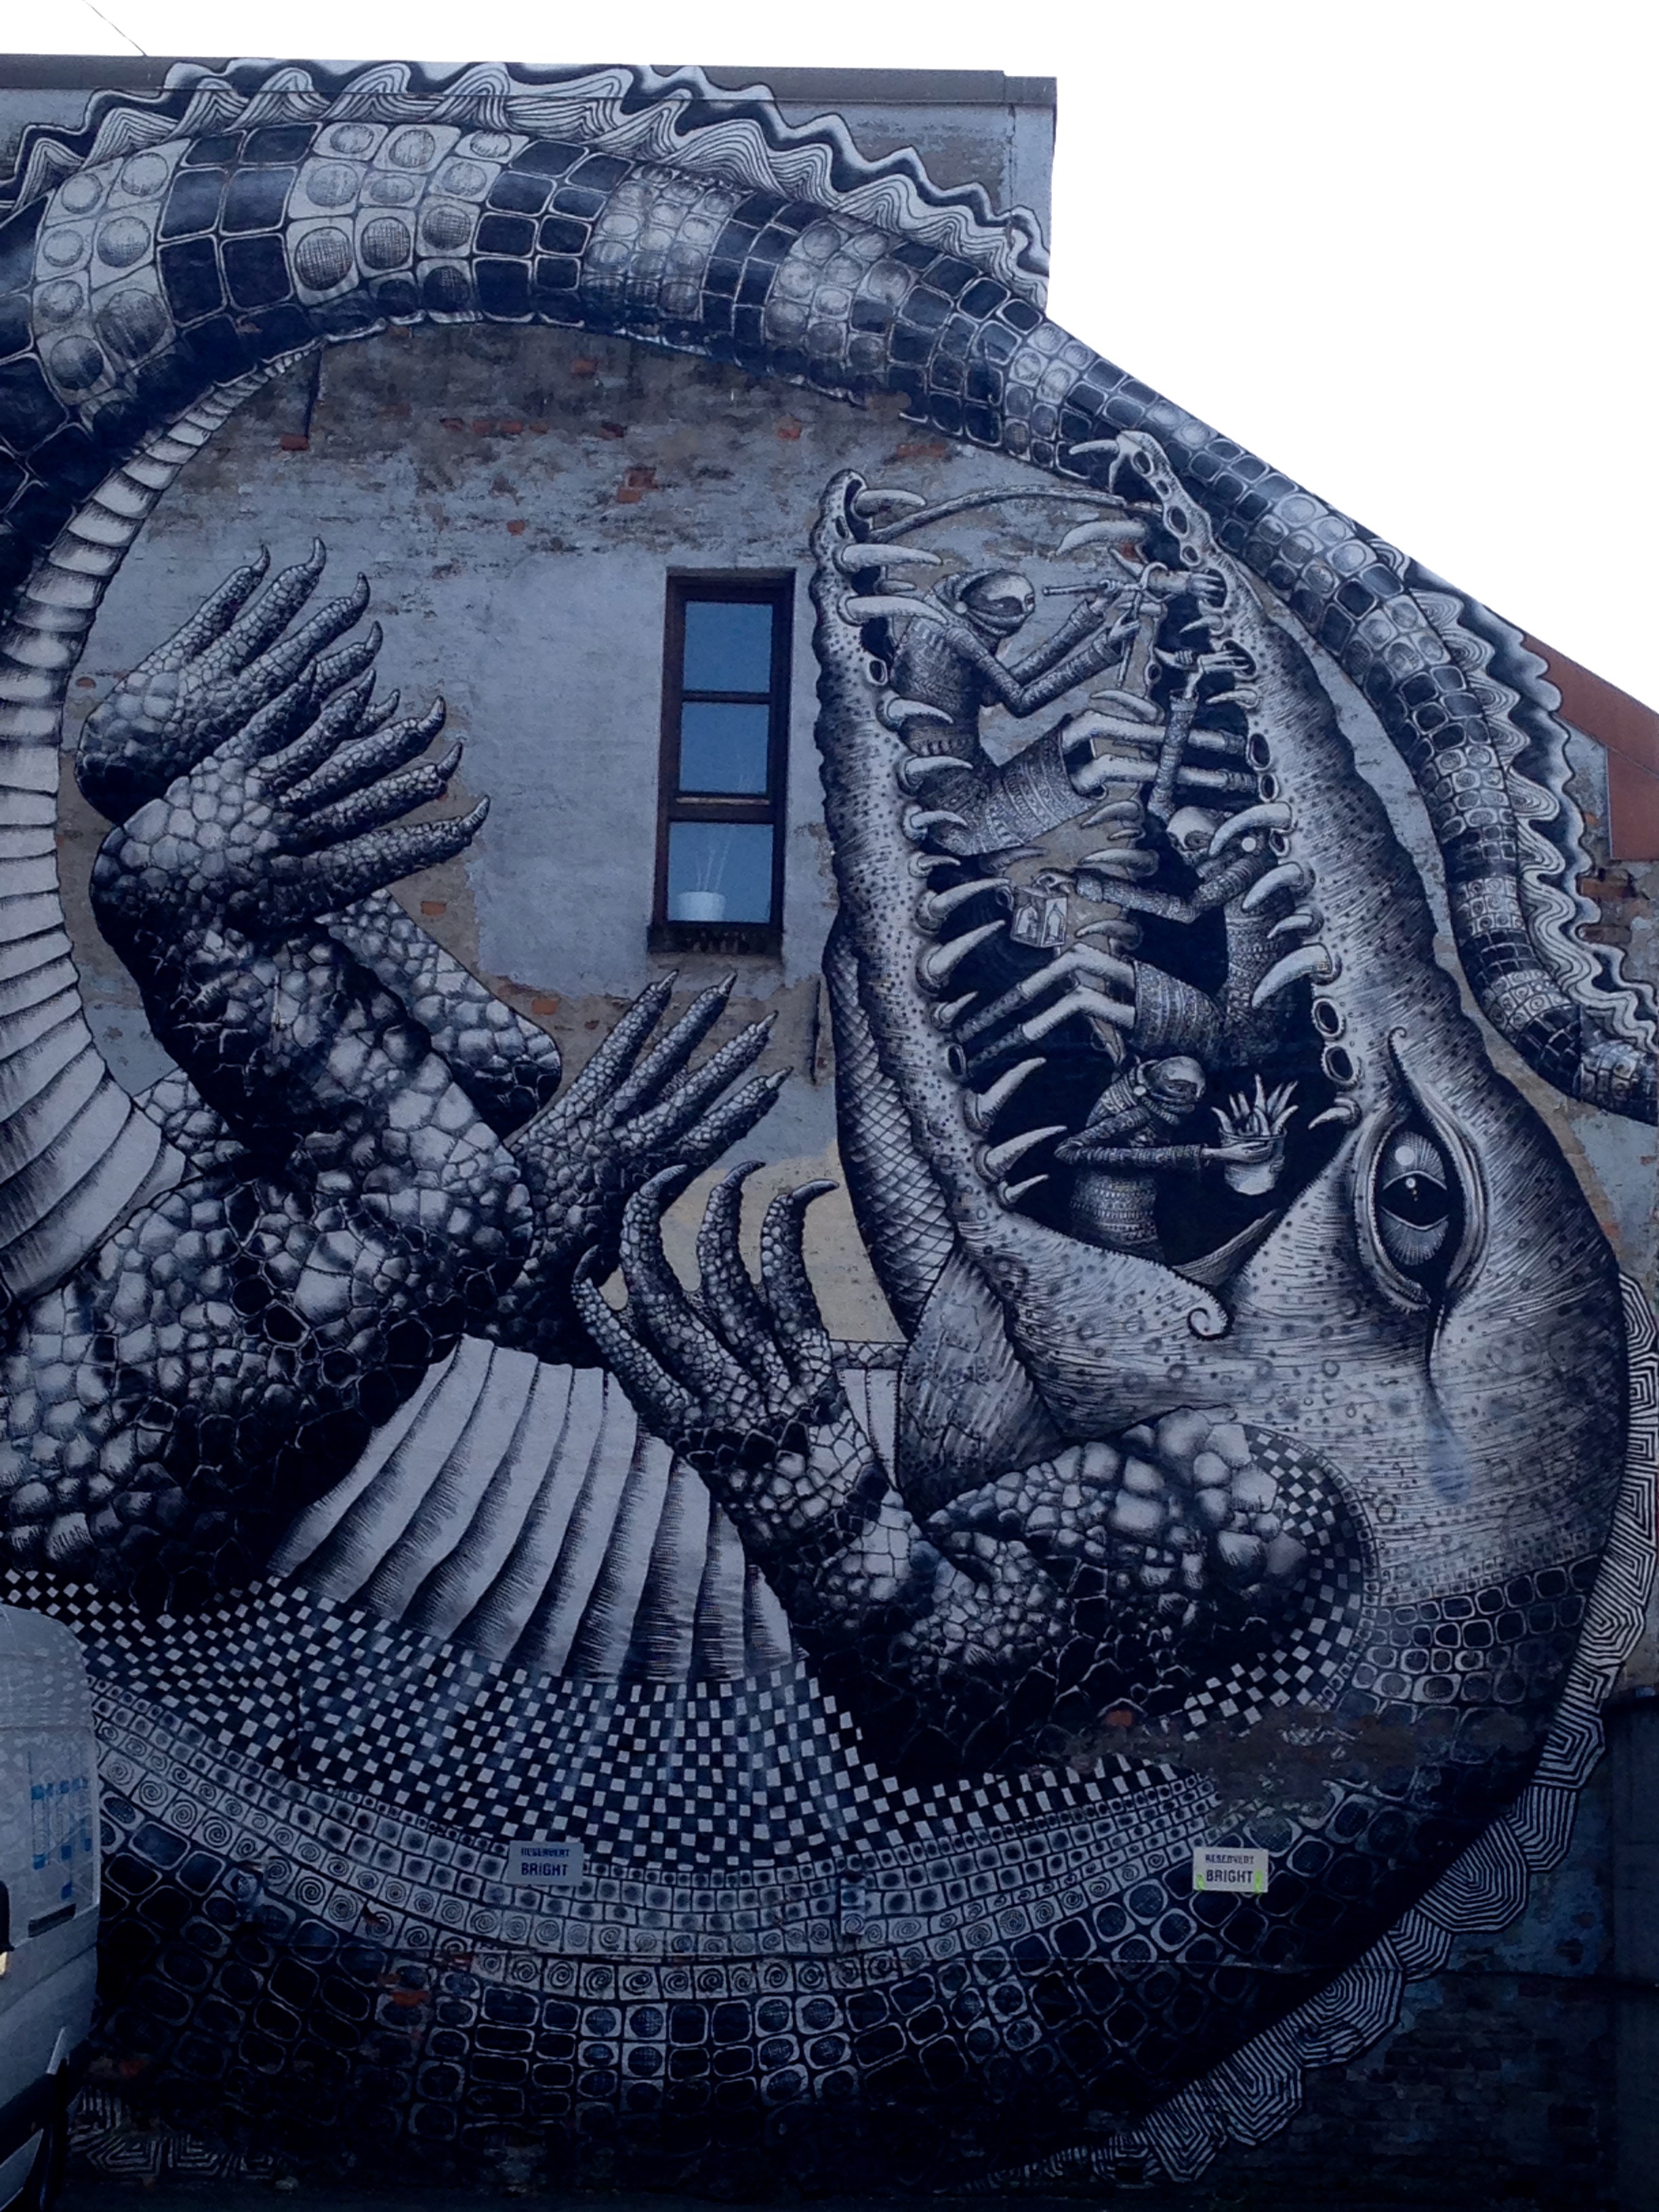 street art brenneriveien oslo norway